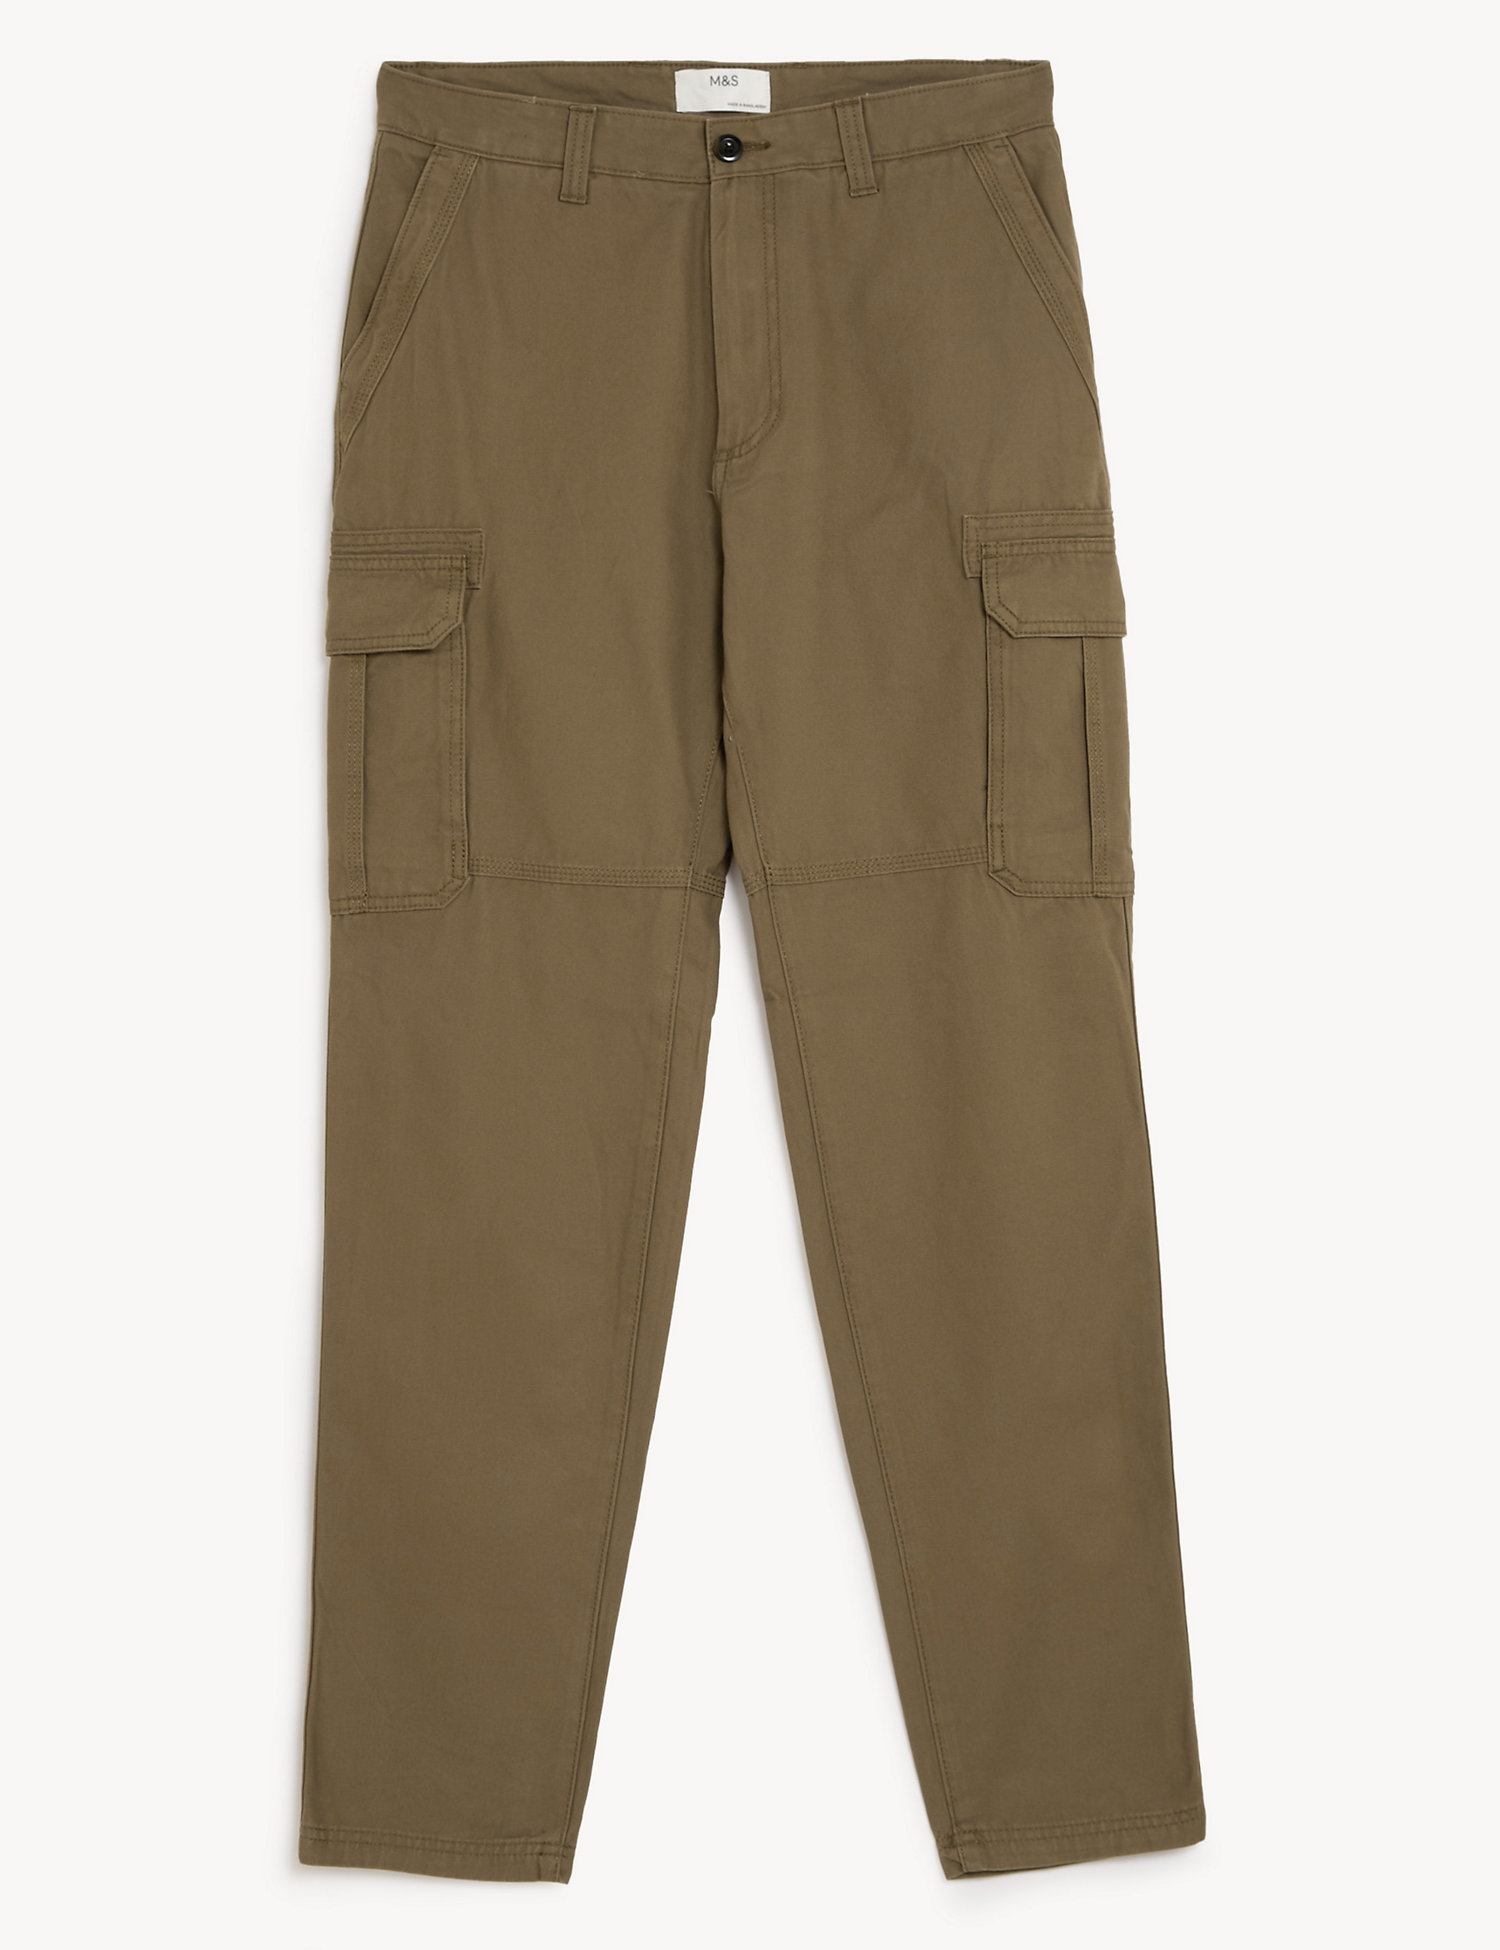 Sergeant Olive Pedal Pusher Shorts